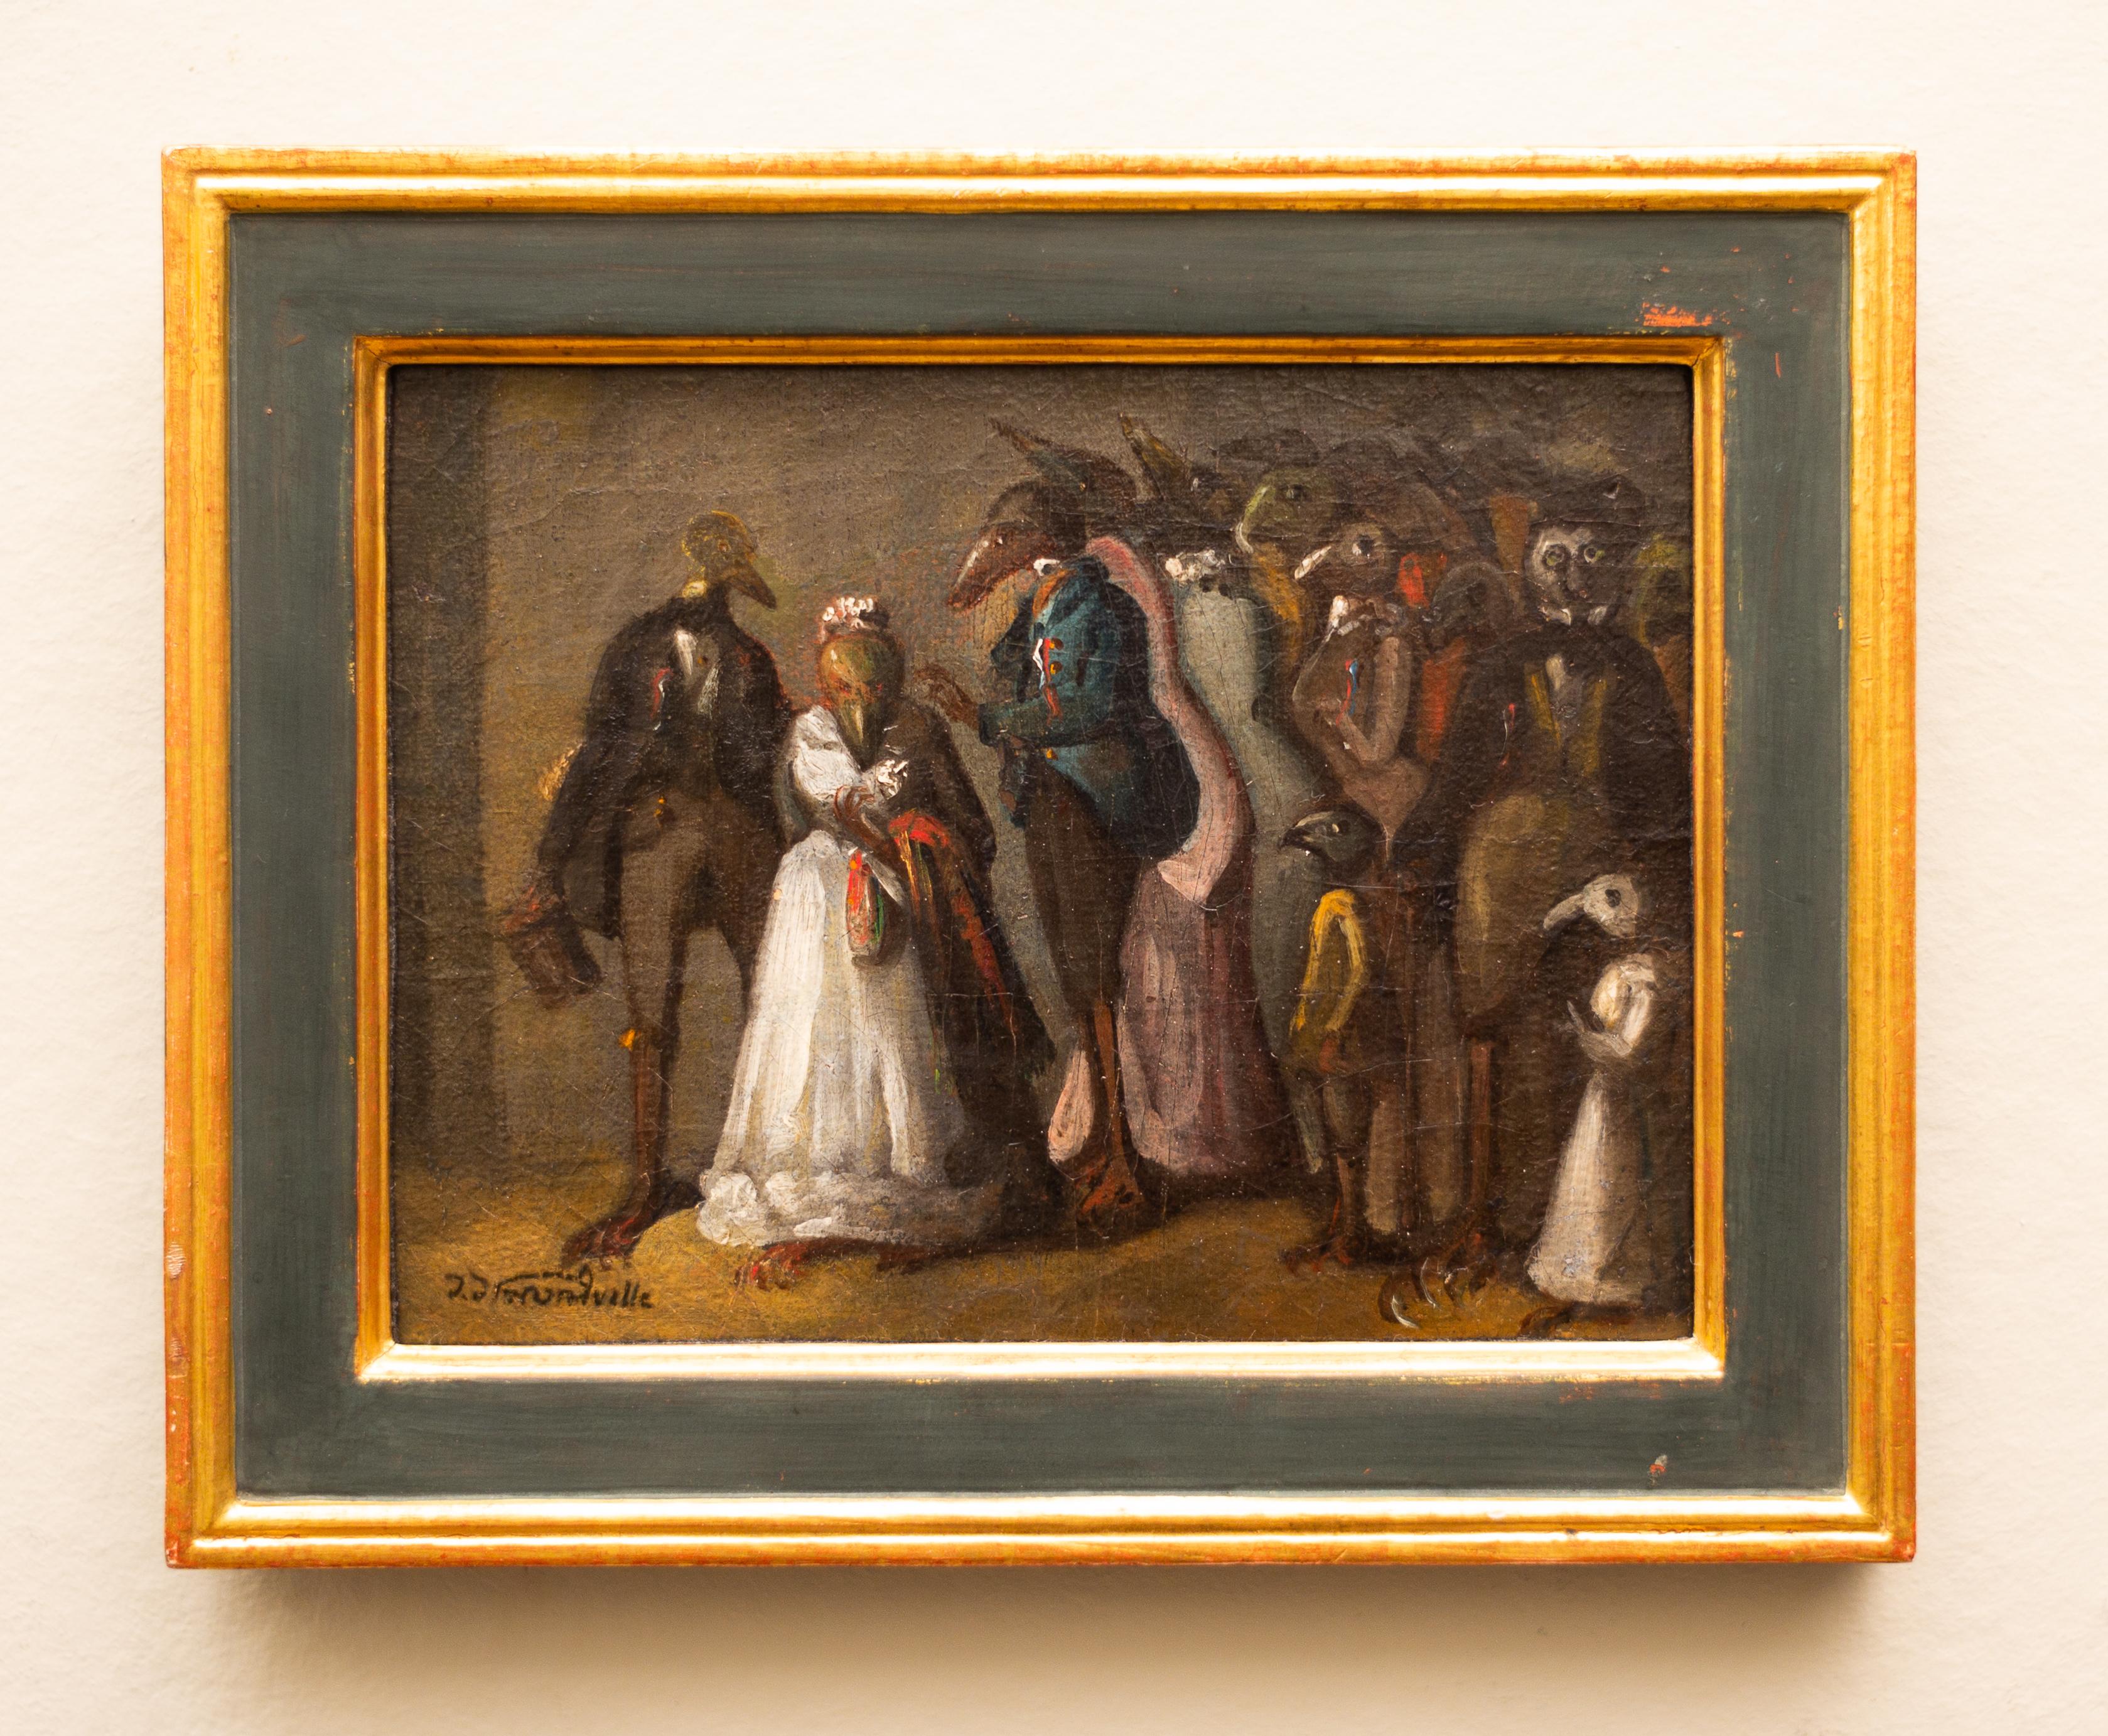 The Bird Wedding by Jean Ignace Isidore Gérard Grandville  - Painting by J. J. Grandville